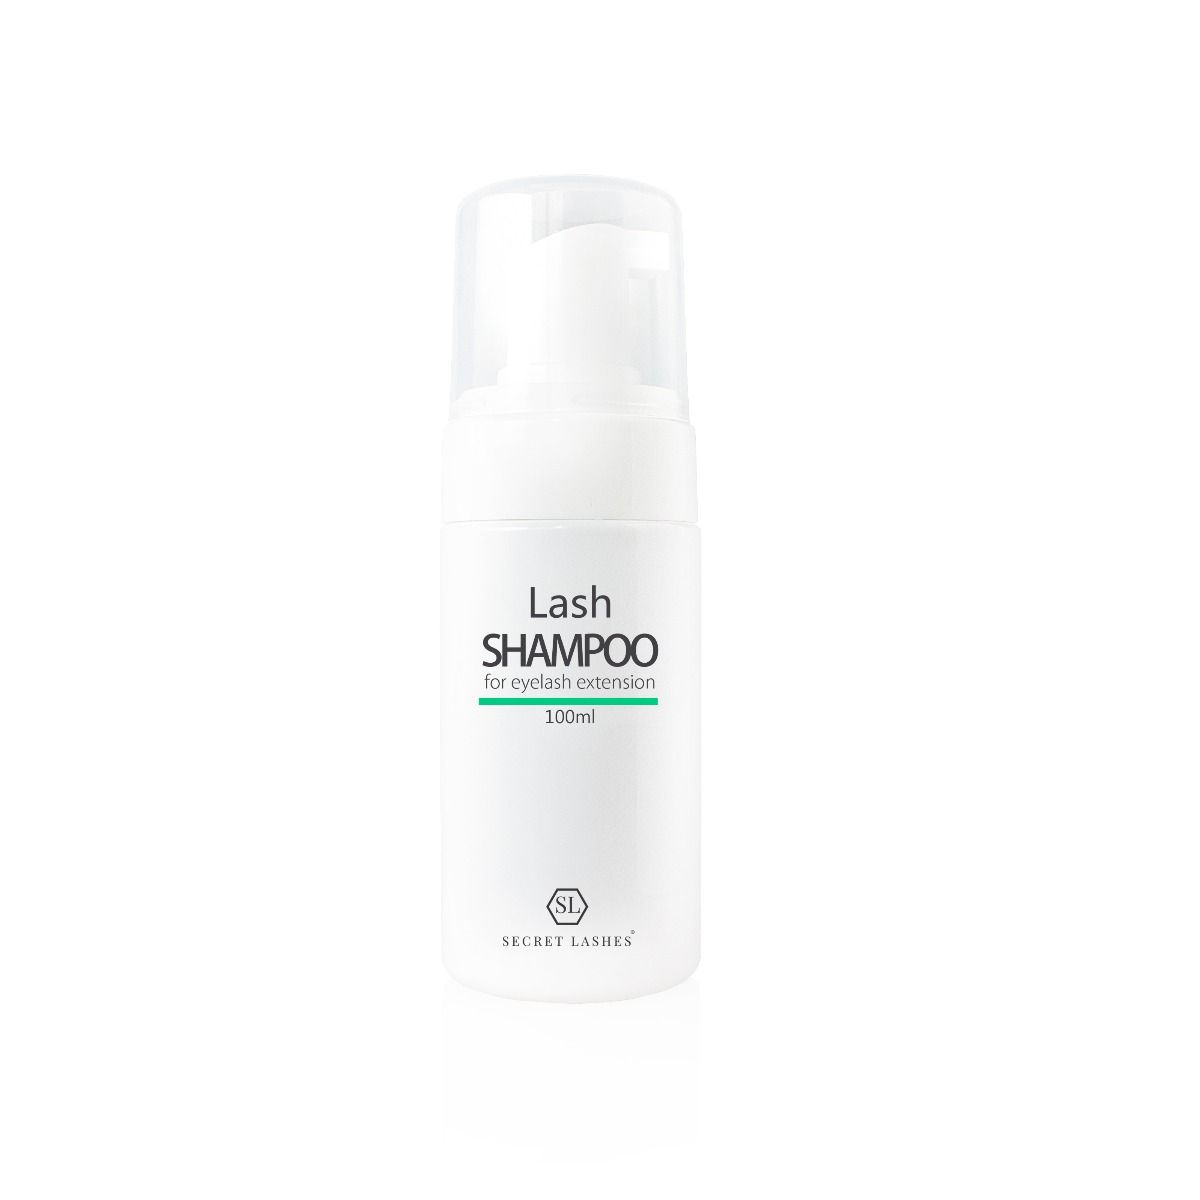 Lash Shampoo 100